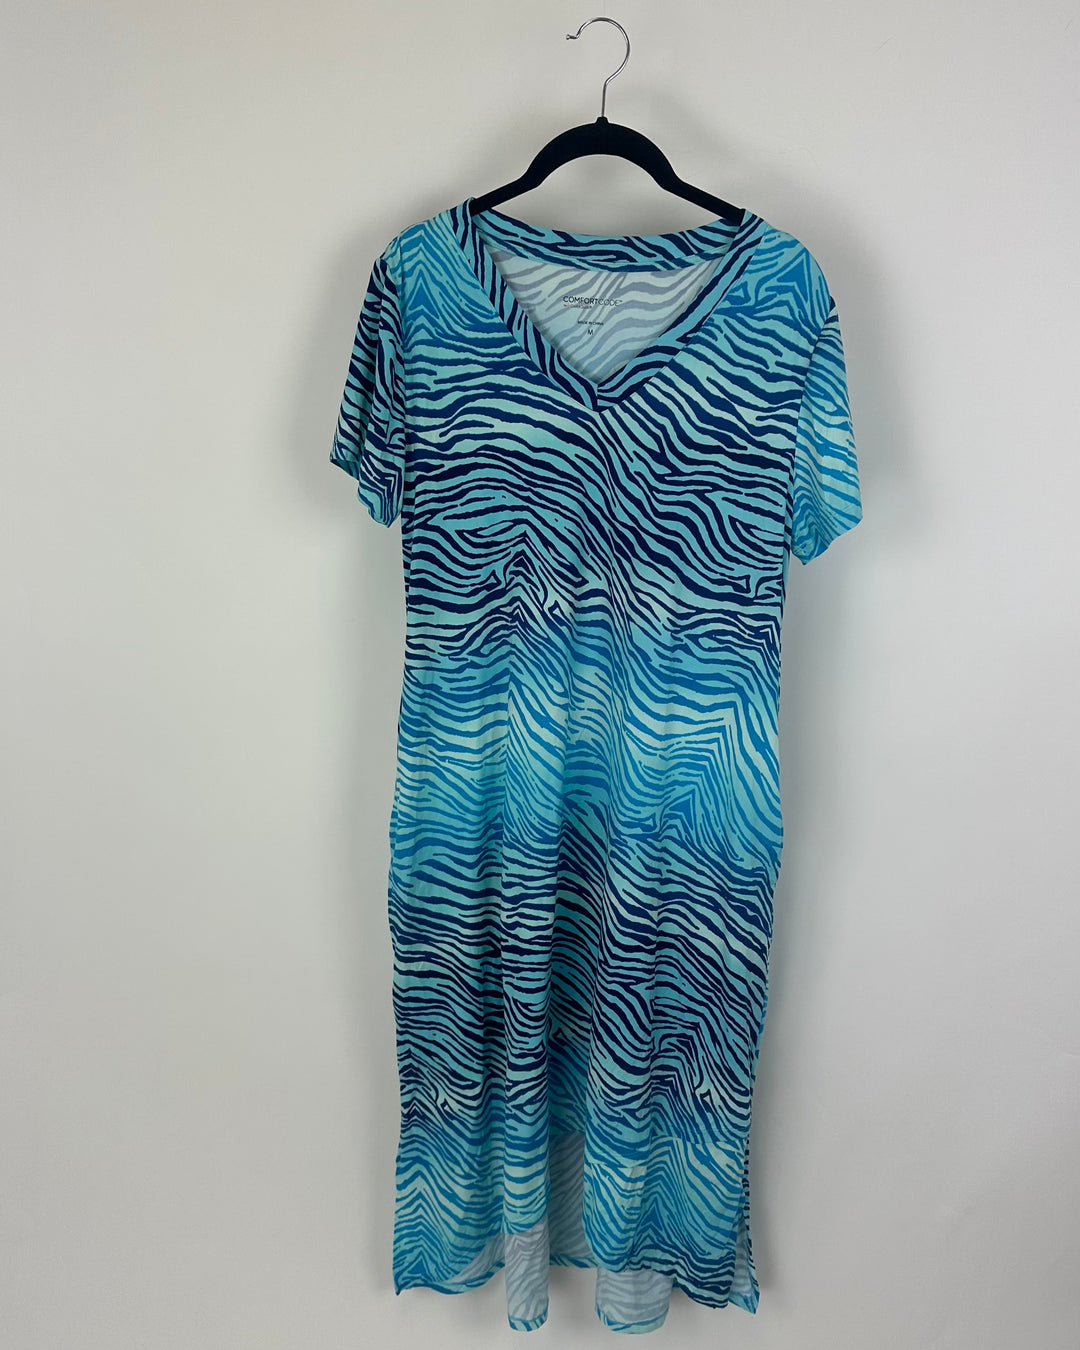 Blue Flowy Short Sleeve Dress - Size 8/10